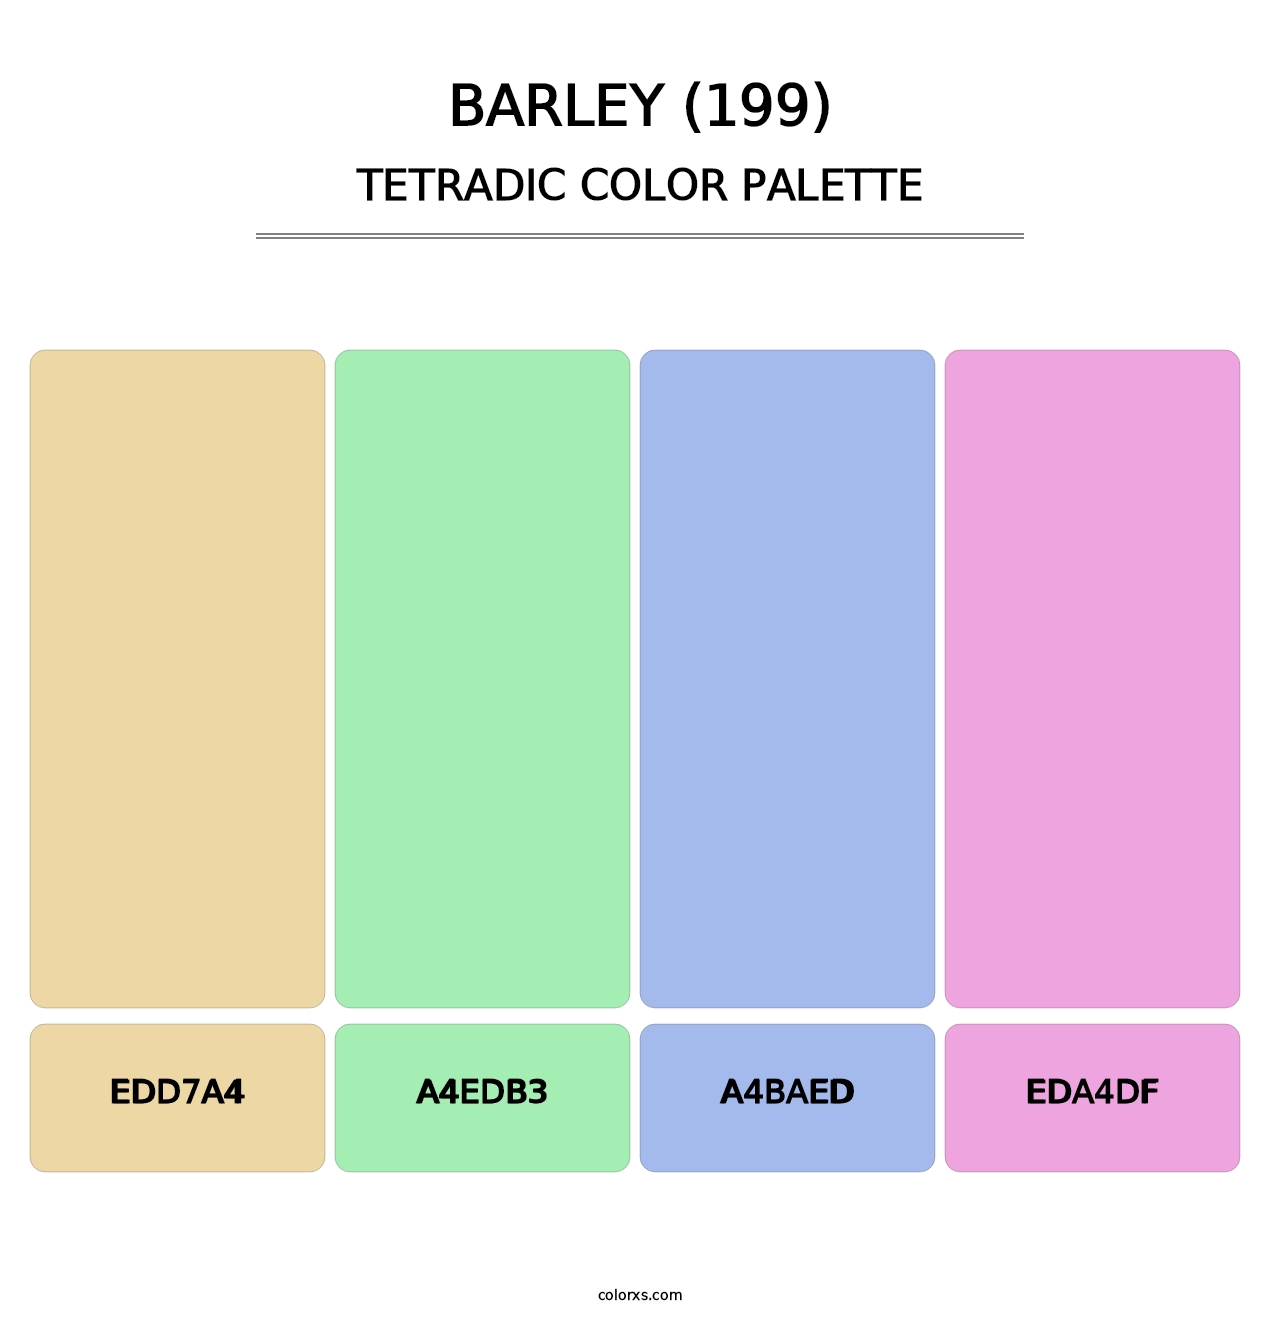 Barley (199) - Tetradic Color Palette